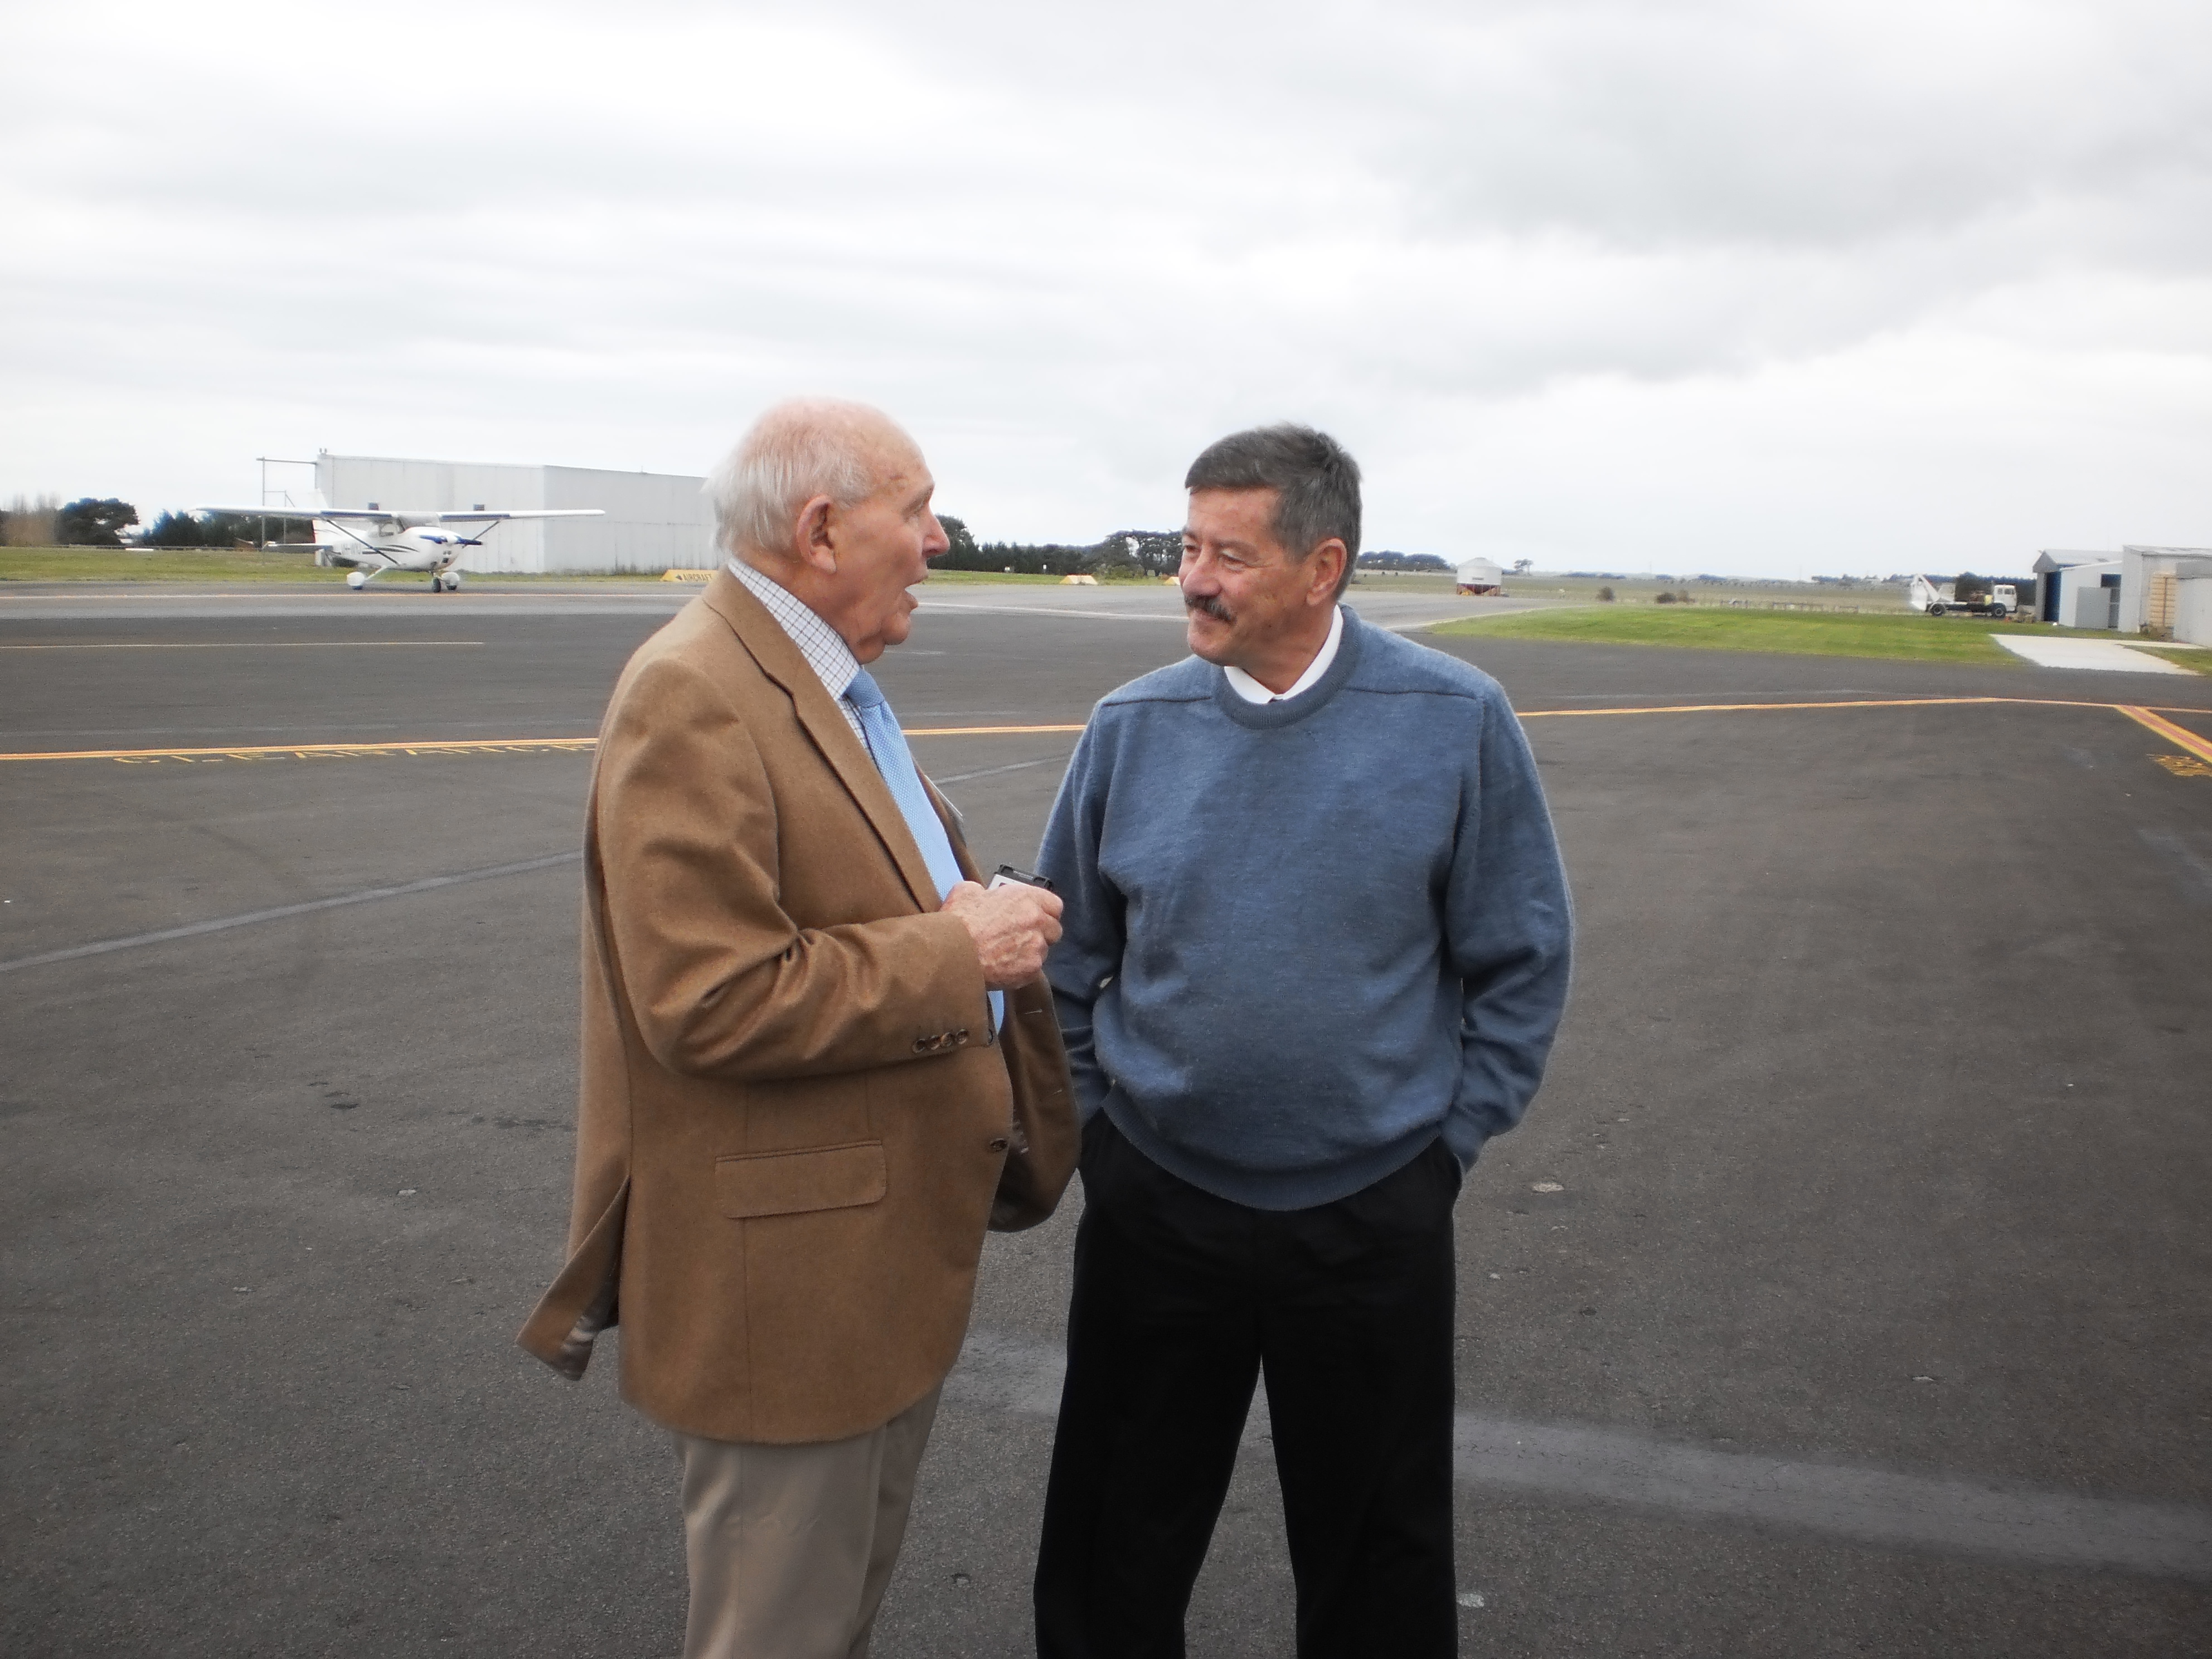 Graeme Bennet talks with Bob Small on a runway.